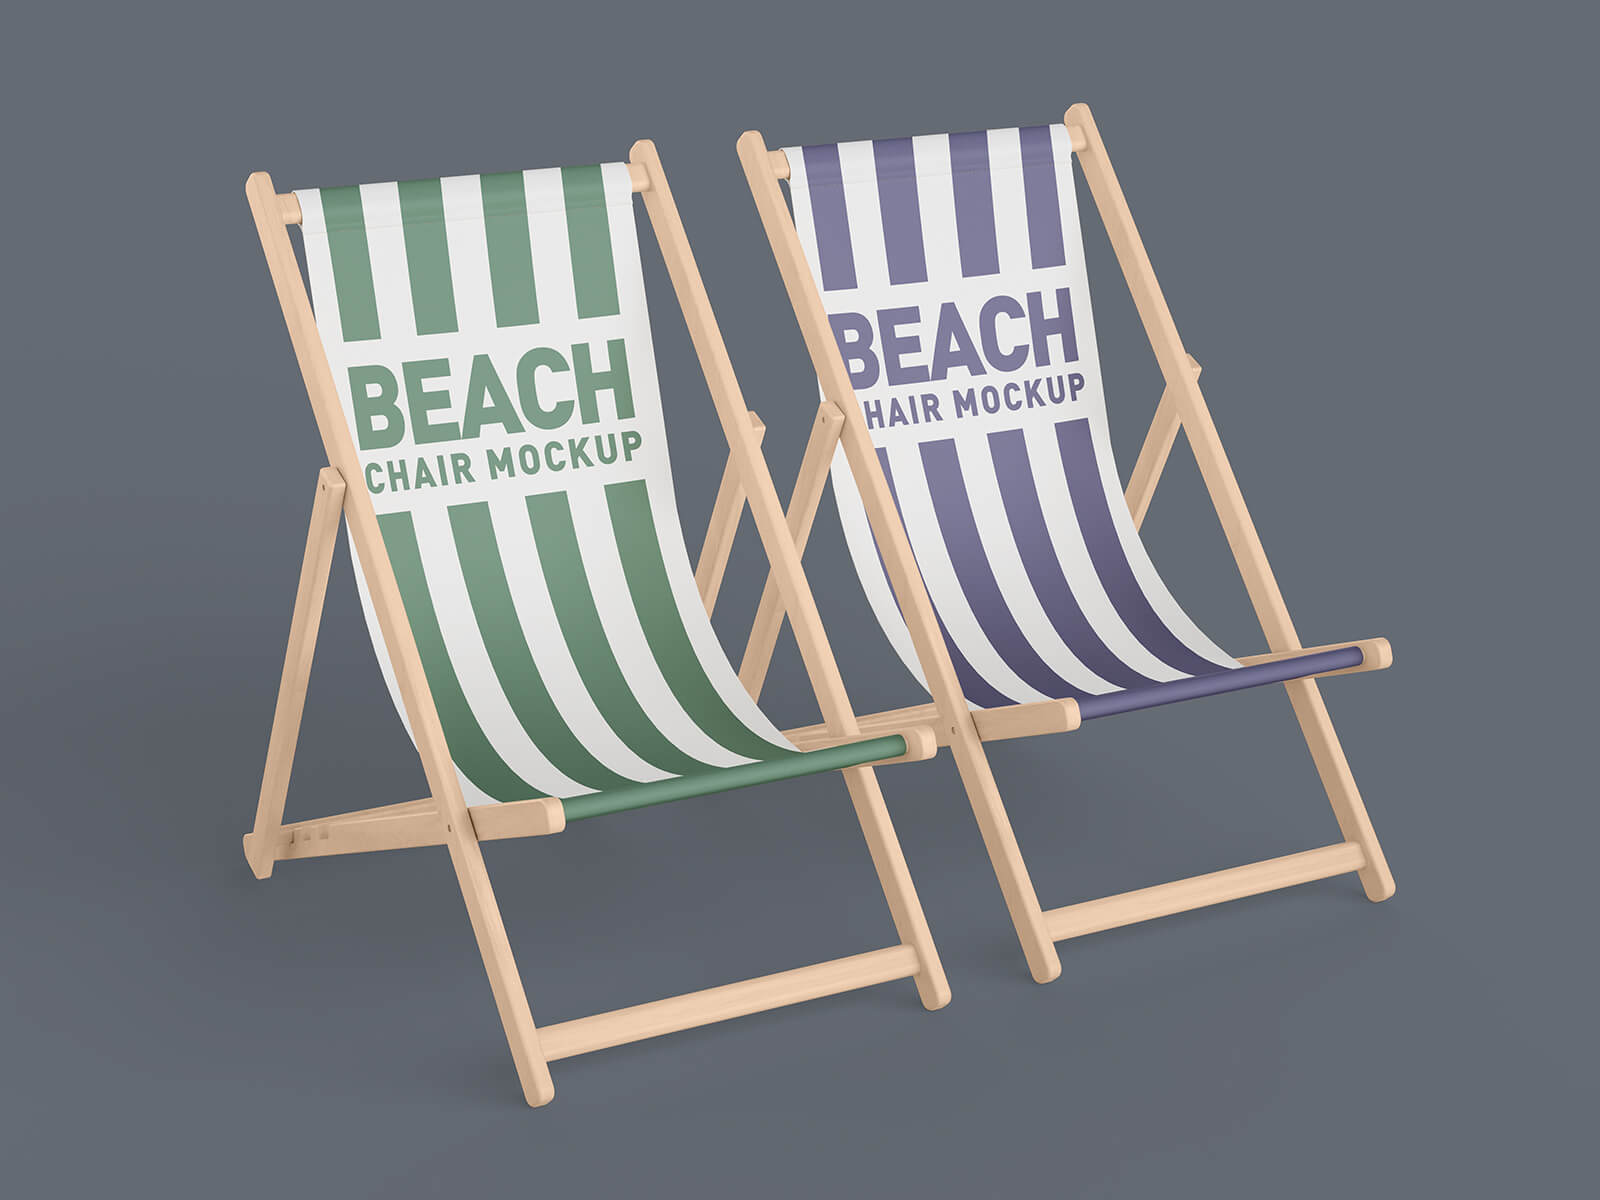 Free Portable Wooden Beach Chair Mockup PSD Set